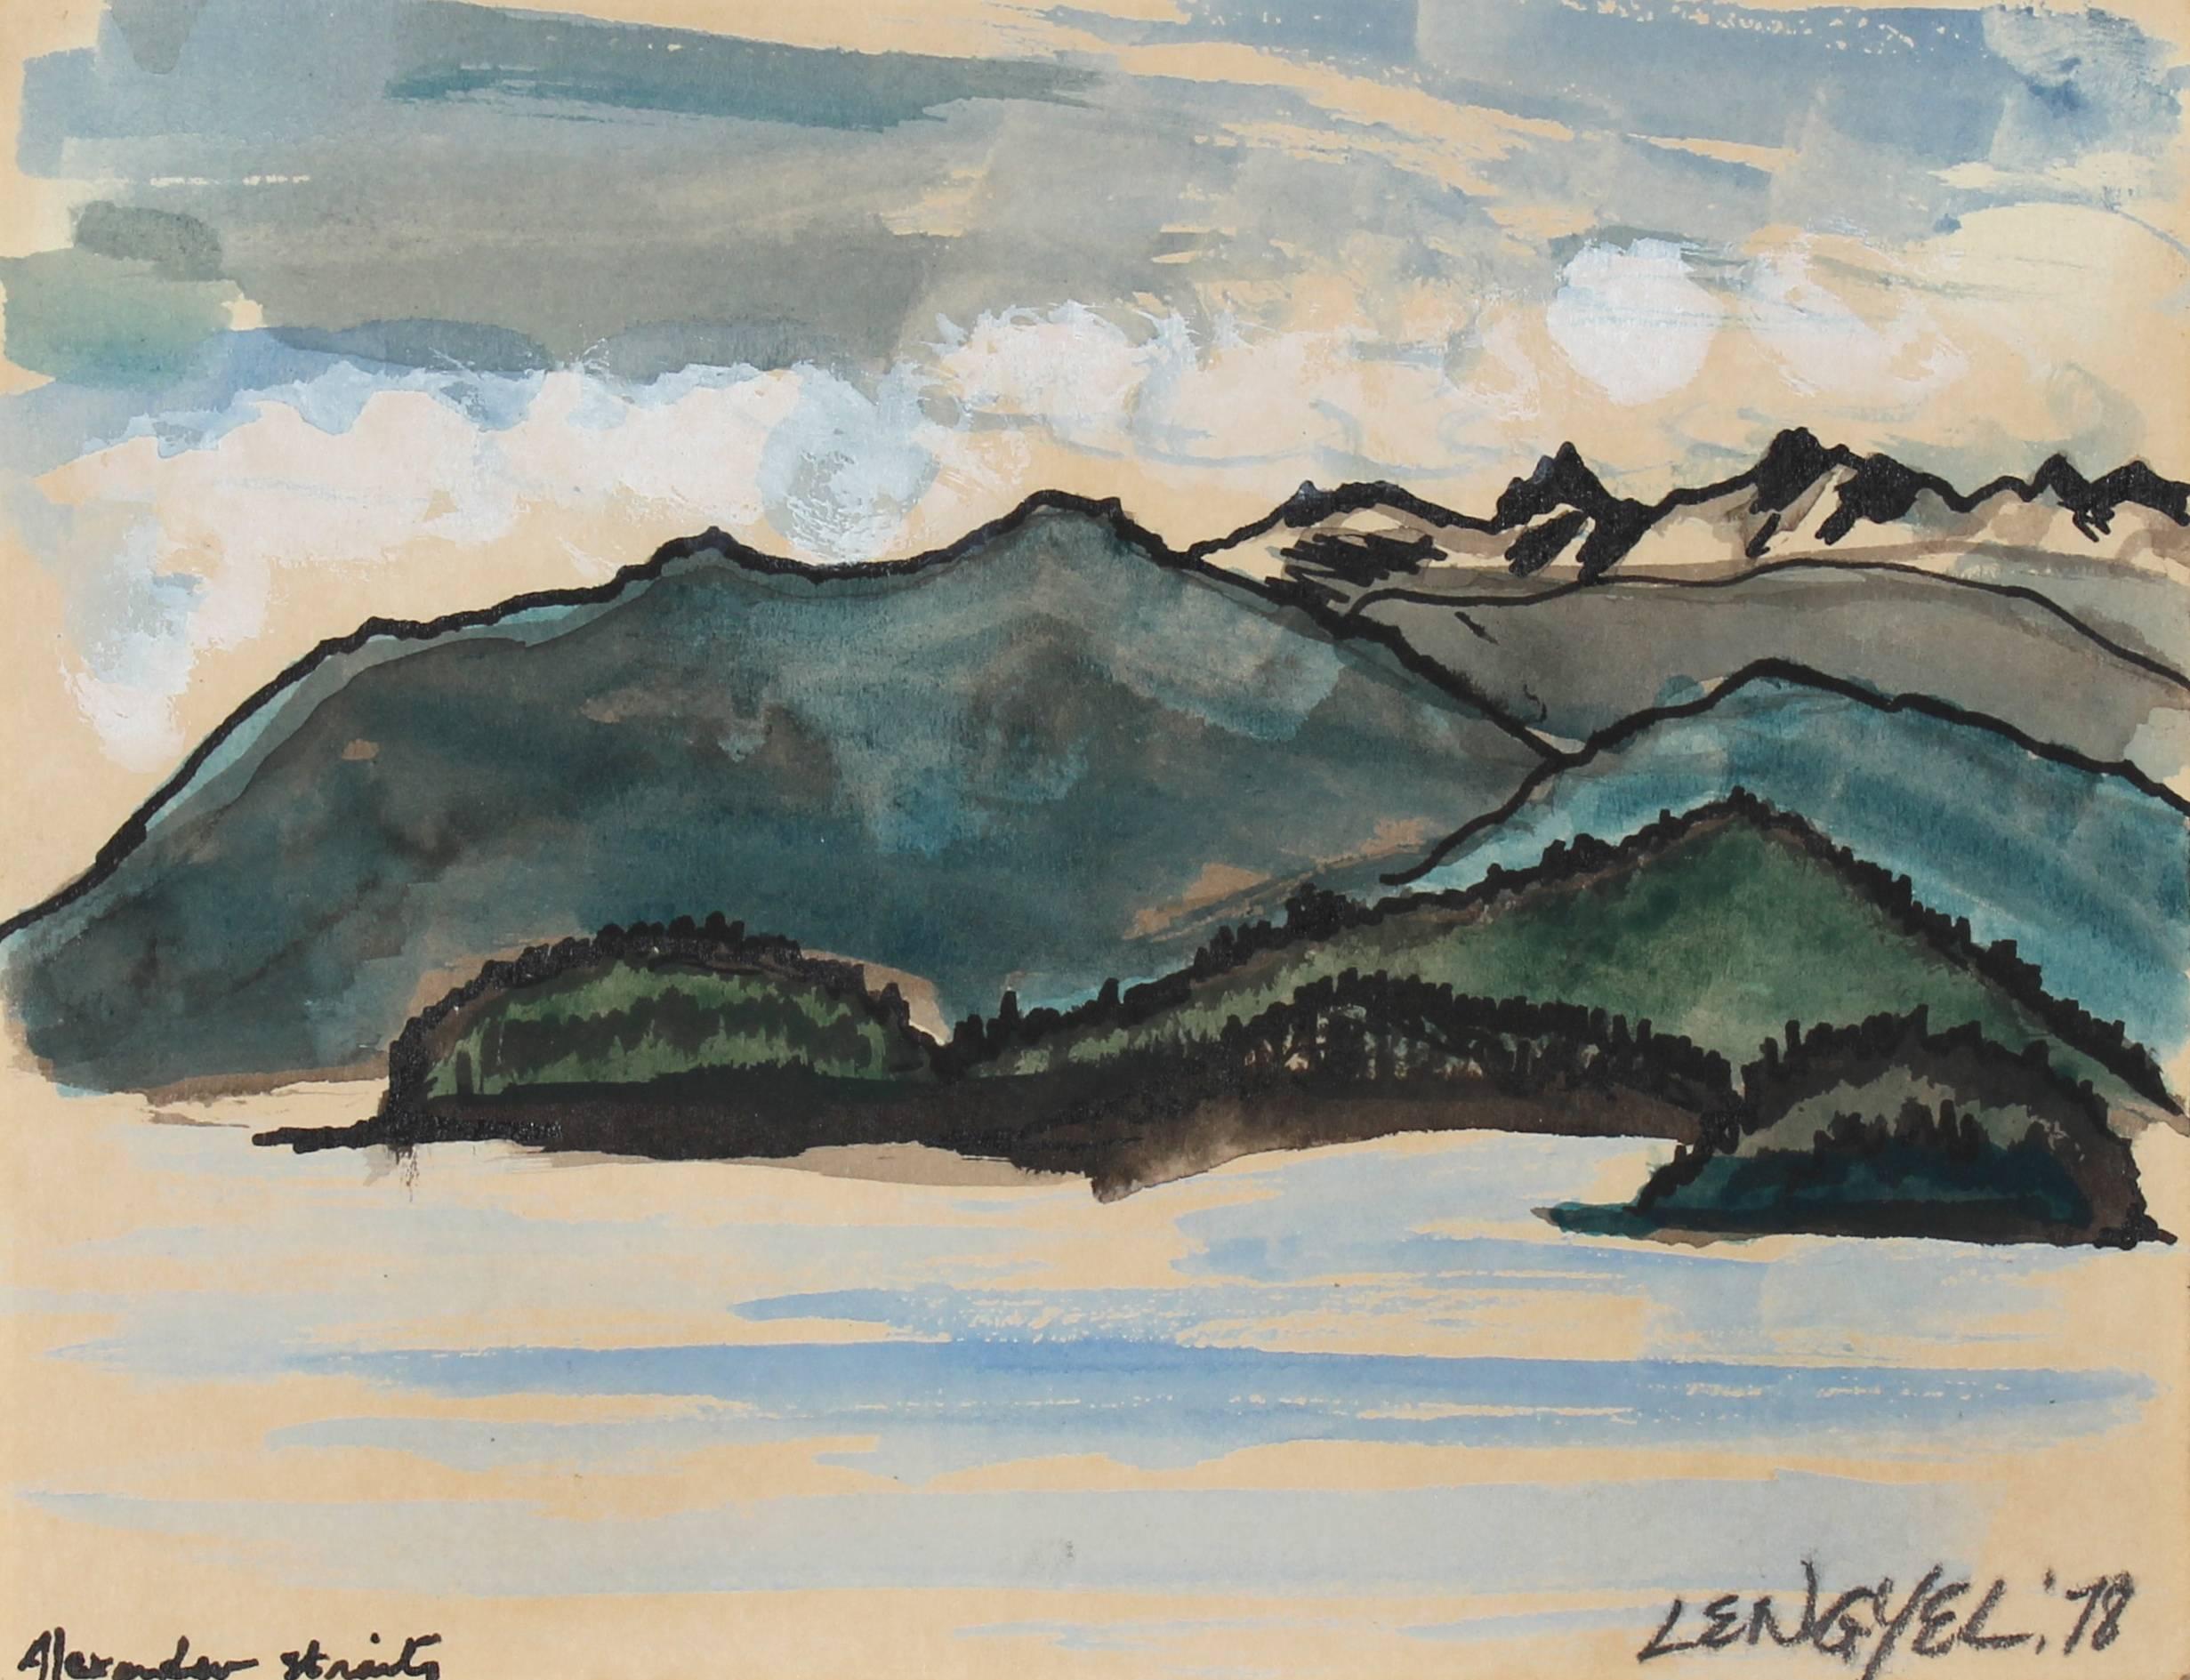 Laura Lengyel Landscape Art - "Alexander Straits" Alaskan Landscape in Watercolor, 1978